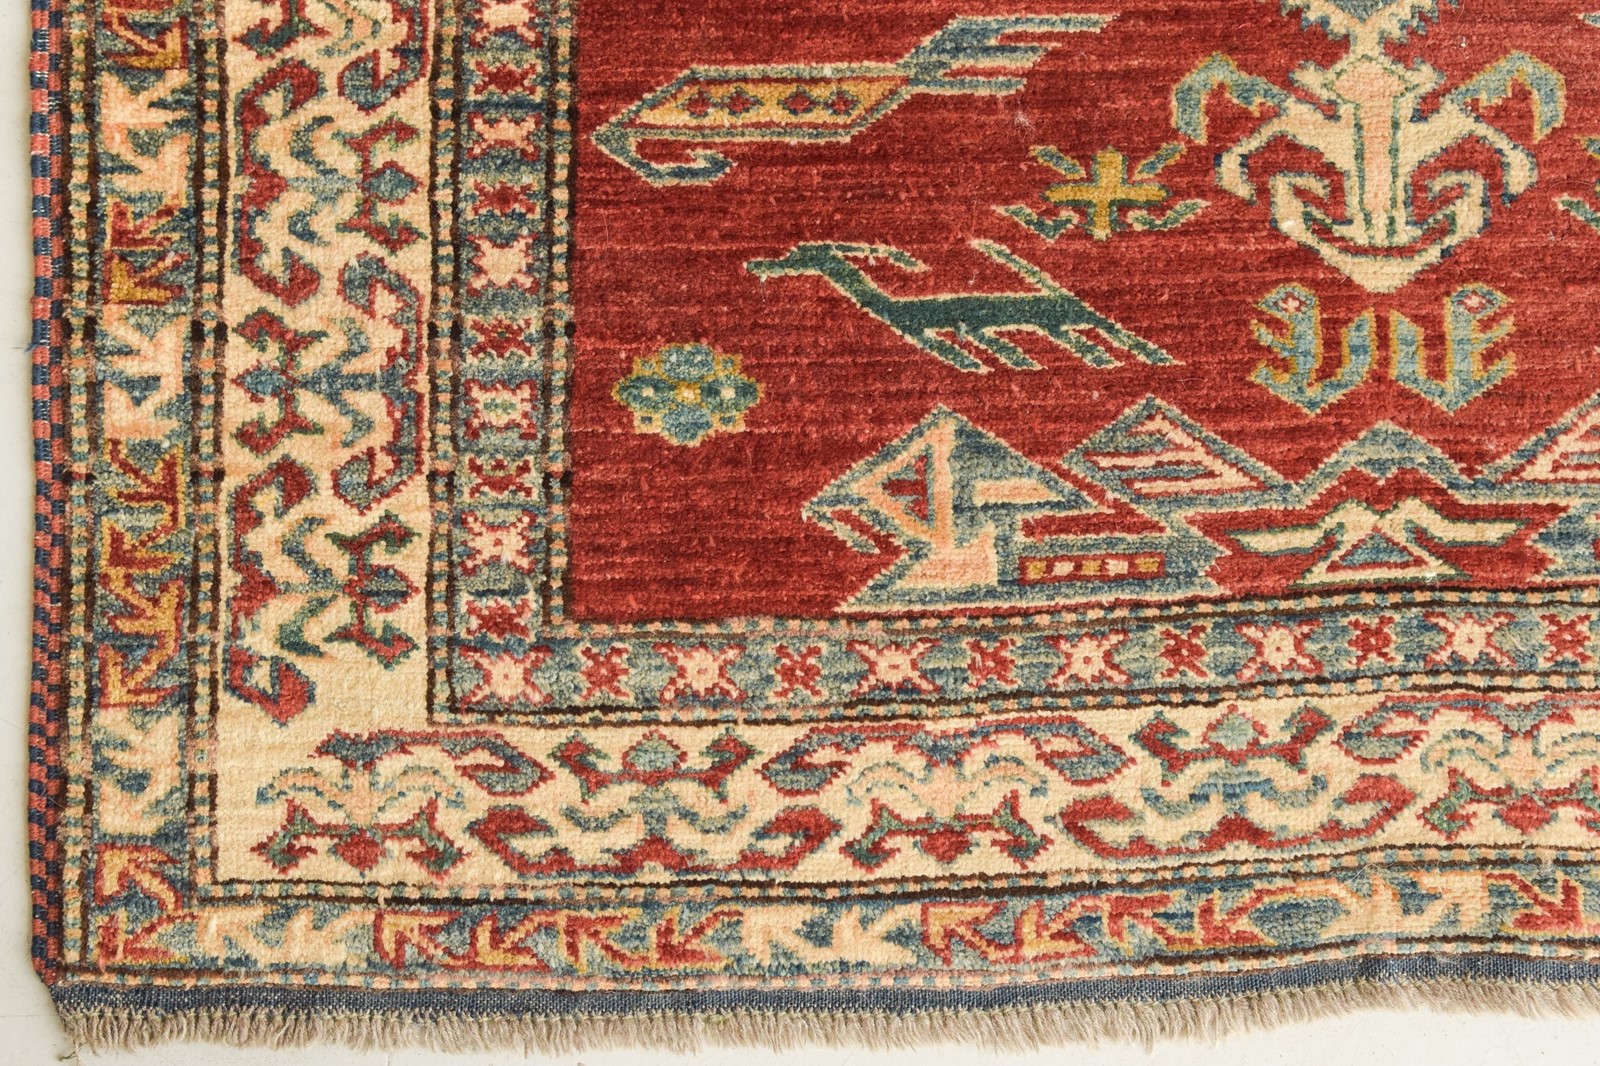 Gooch Oriental Supreme Kazak Rug, Red, L246 x W167 cm